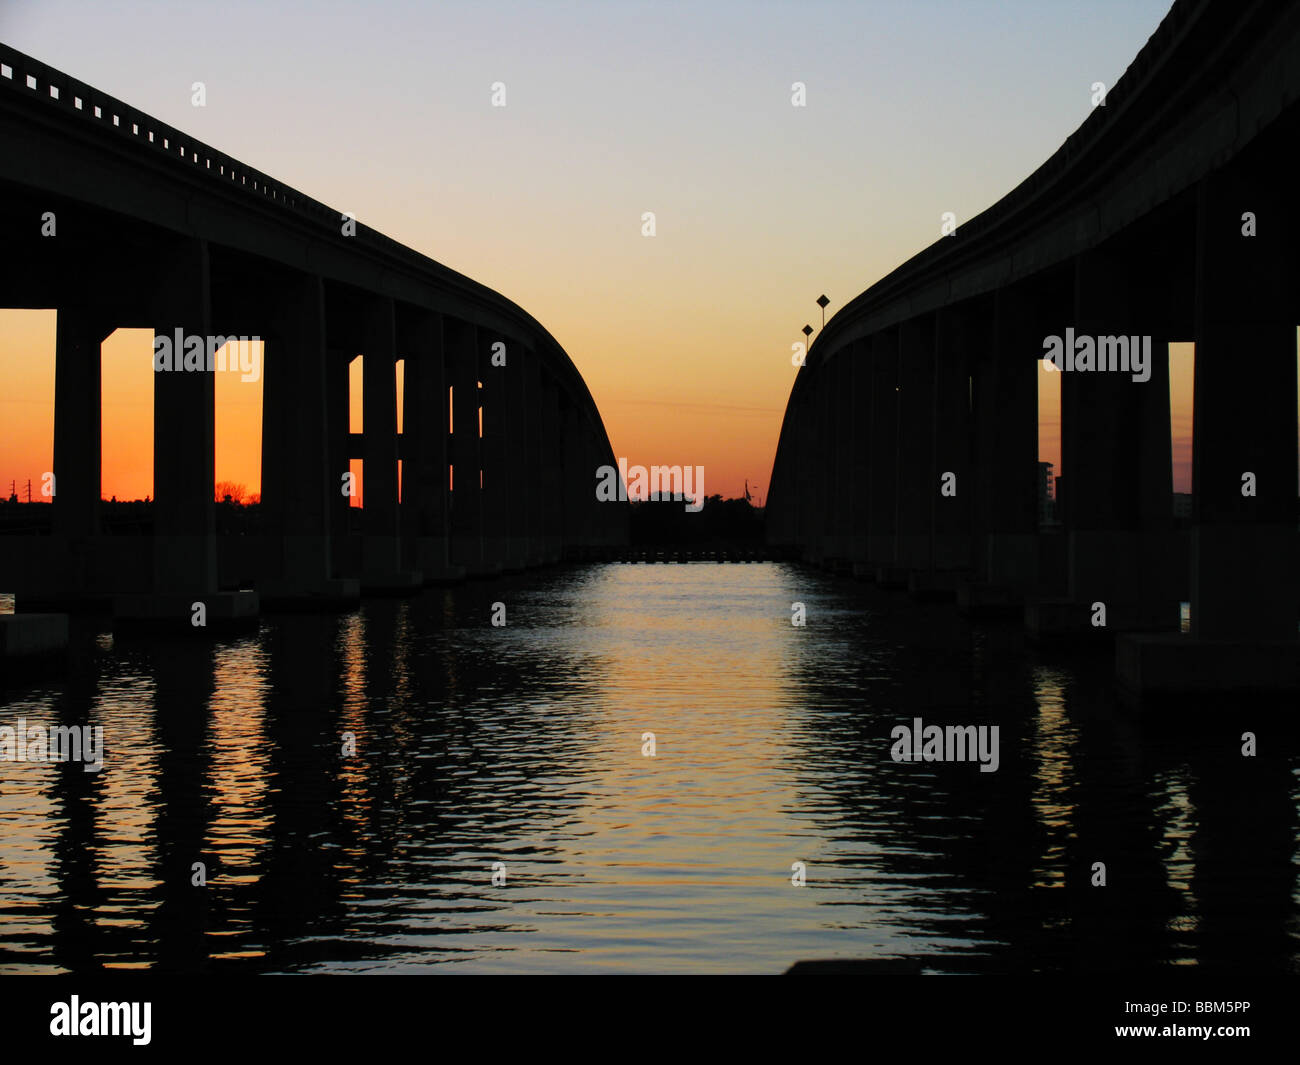 Expressway bridges across river in Florida, scenic, sunset, silouette. Stock Photo